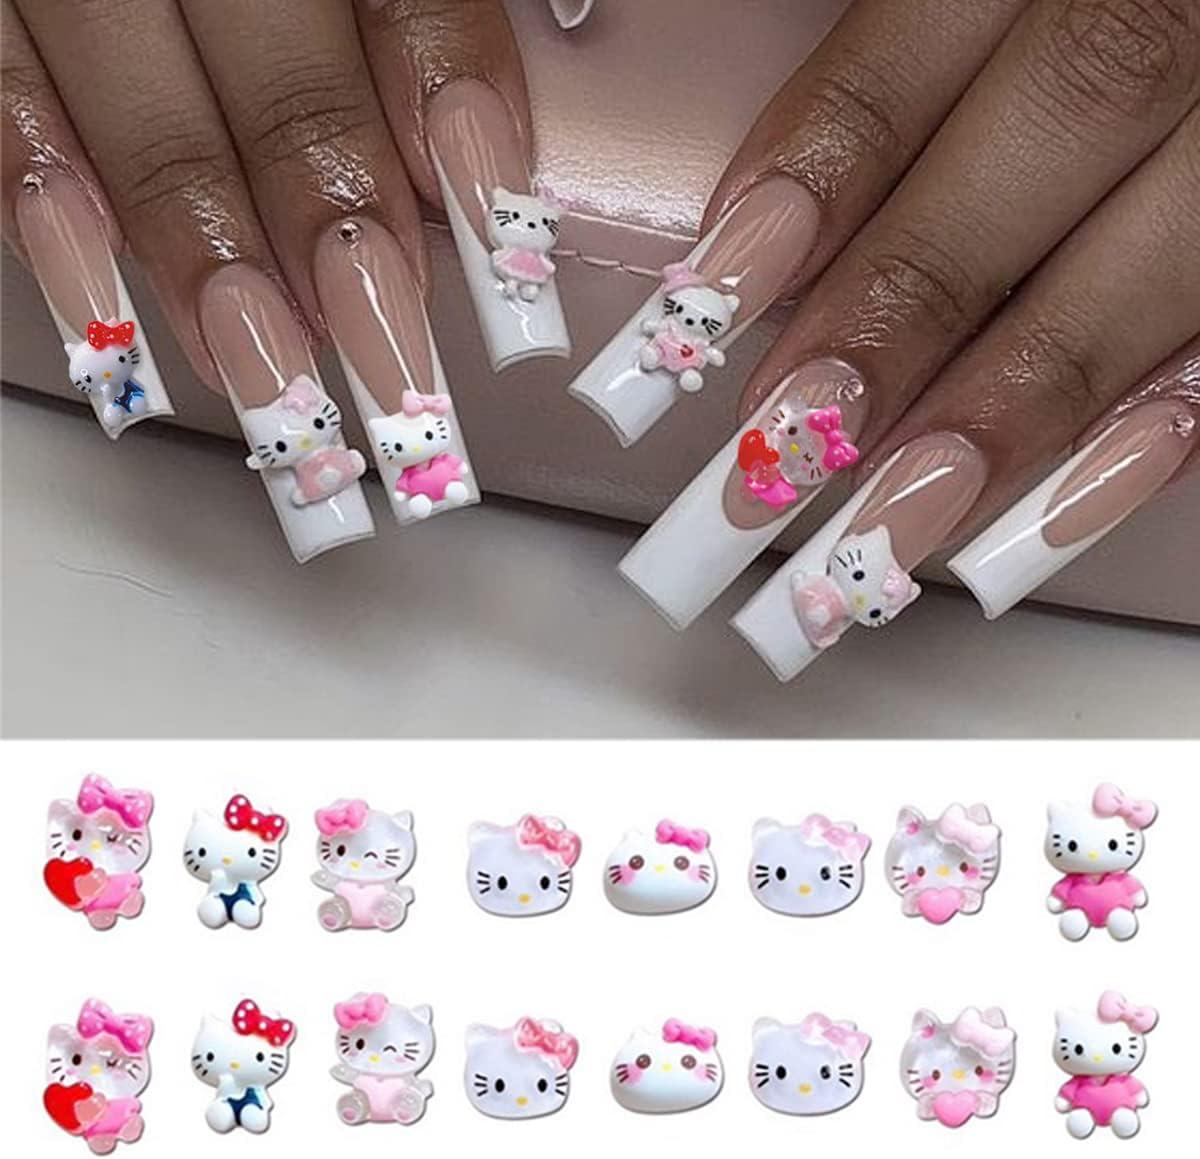 OPI x Hello Kitty Nail Lacquer | Rainbow Nails' Blog